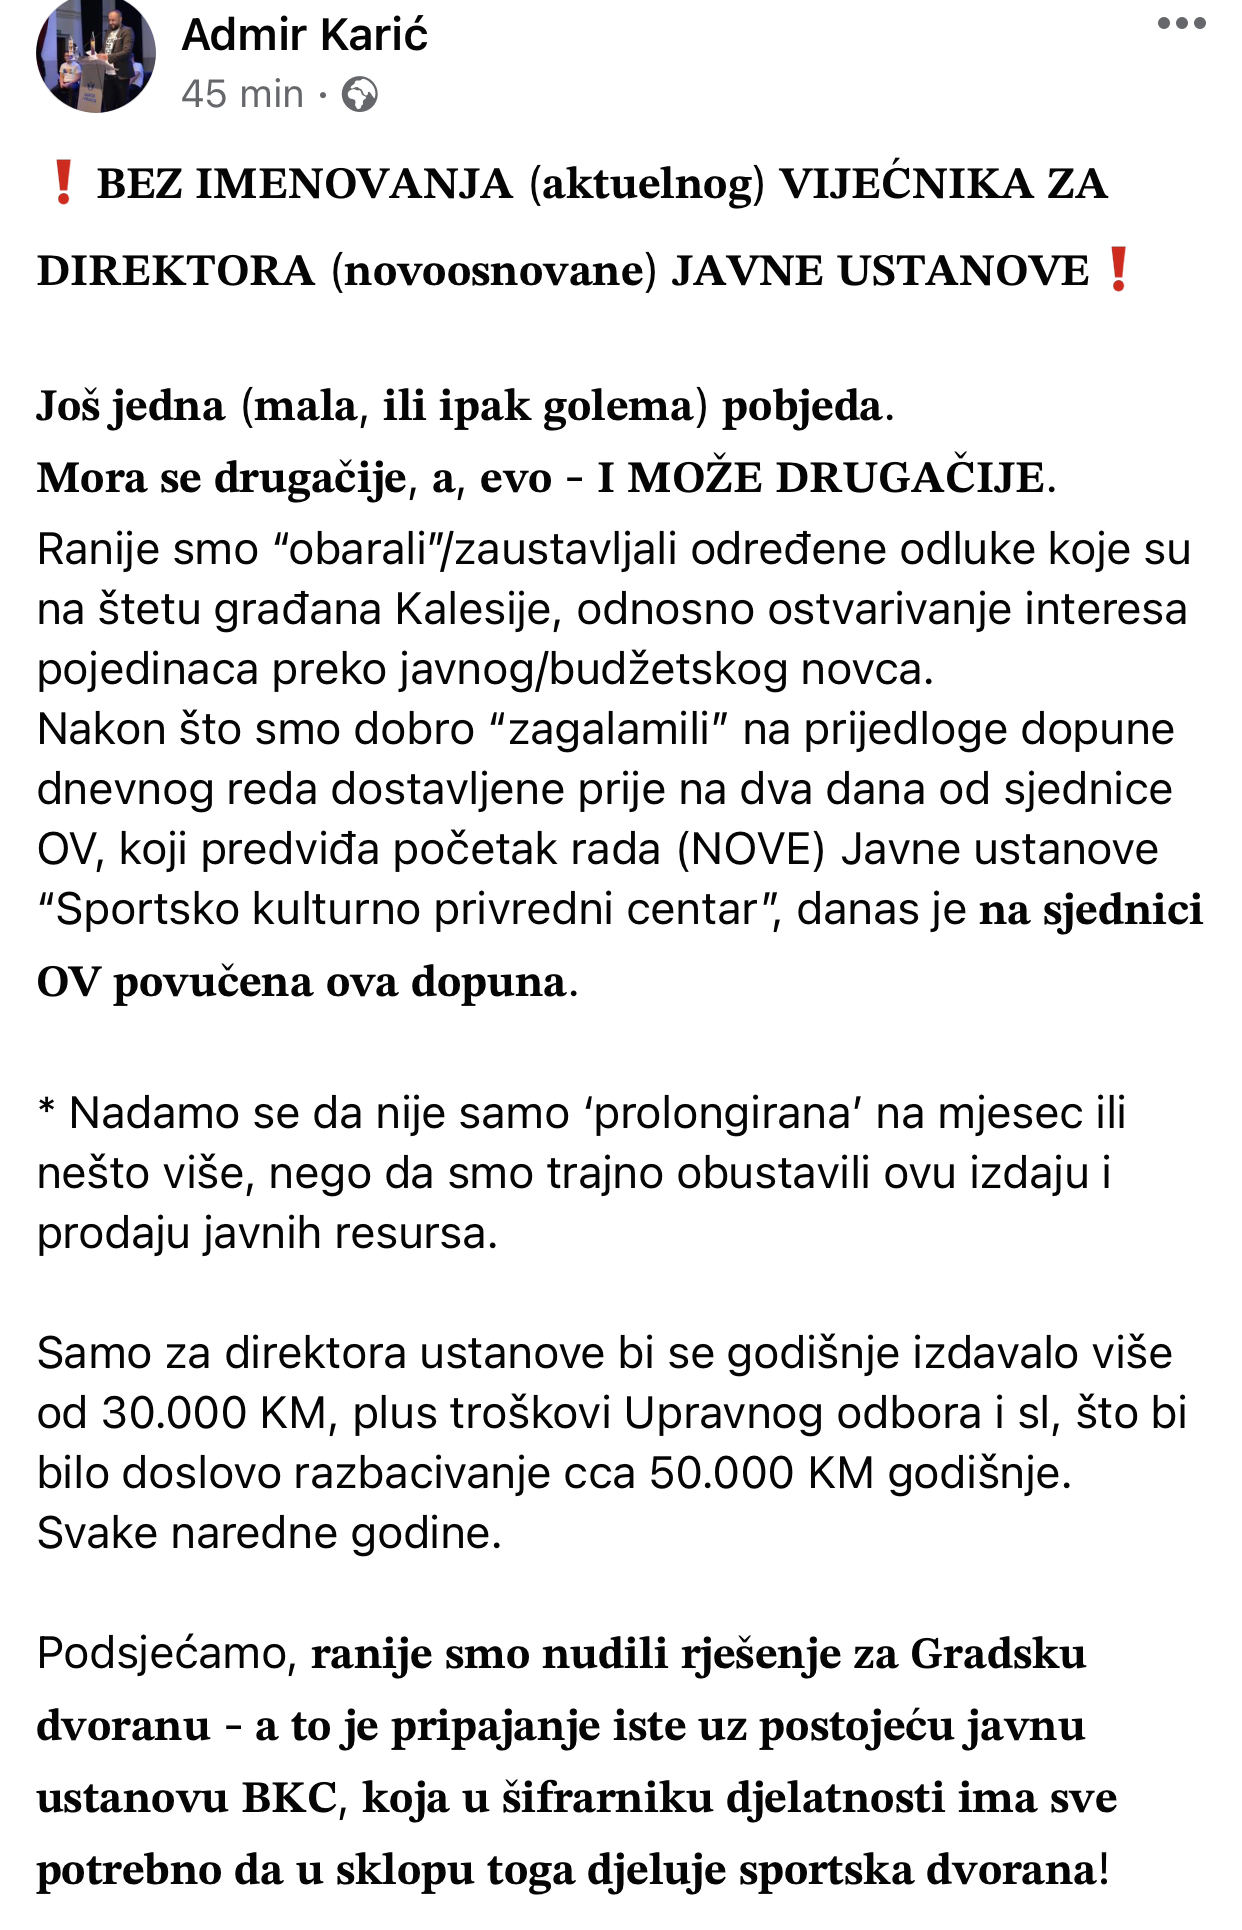 povučen prijedlog: zaustavljeno imenovanje vijećnika za direktora javne ustanove “sportsko kulturno privredni centar” kalesija